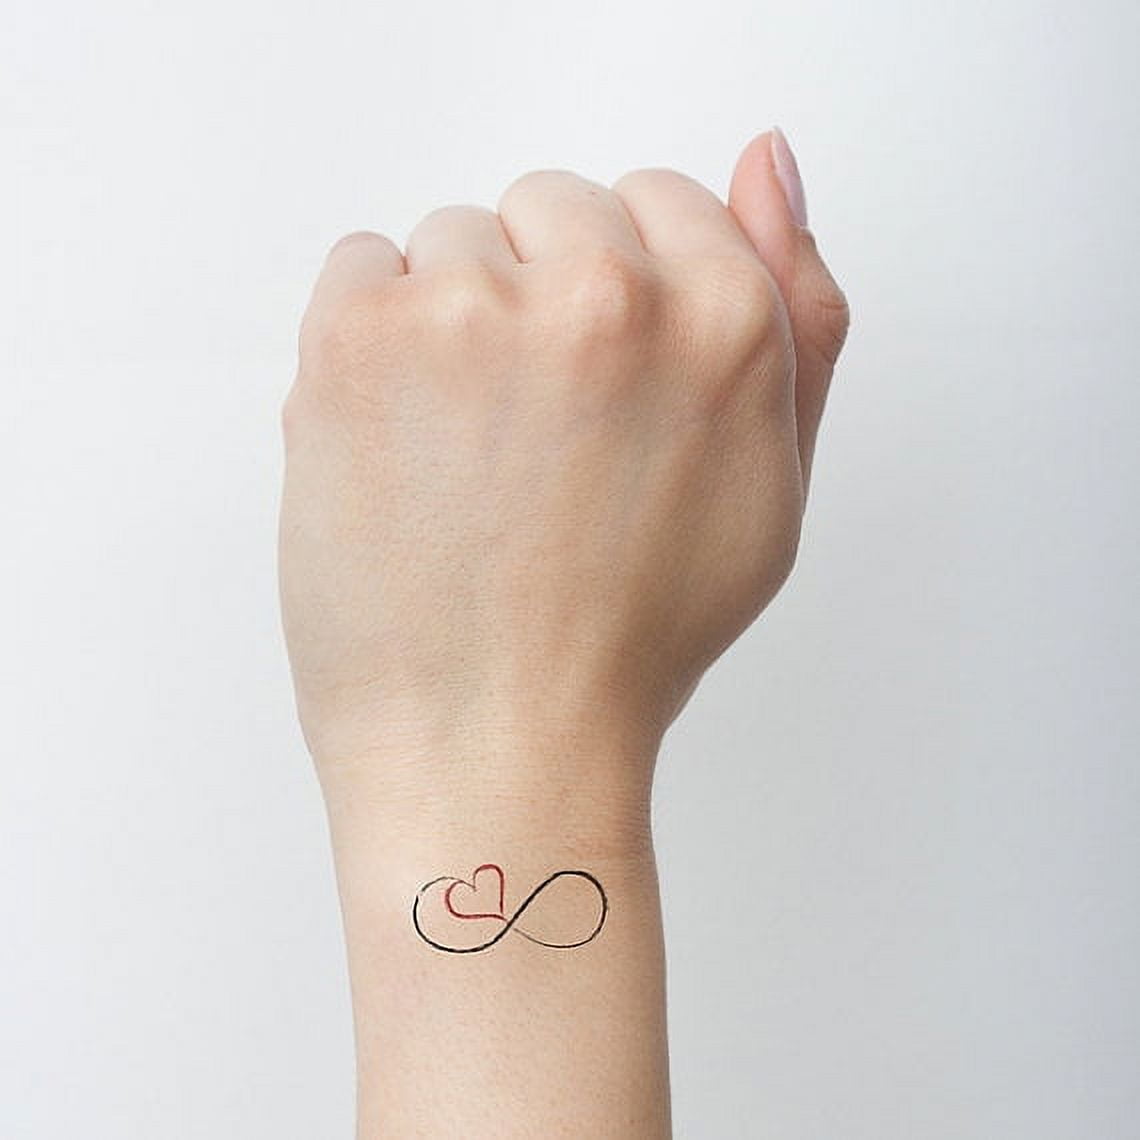 Small minimalist Infinity Tattoo 3 | Infinity tattoos, Small infinity  tattoos, Infinity tattoo designs